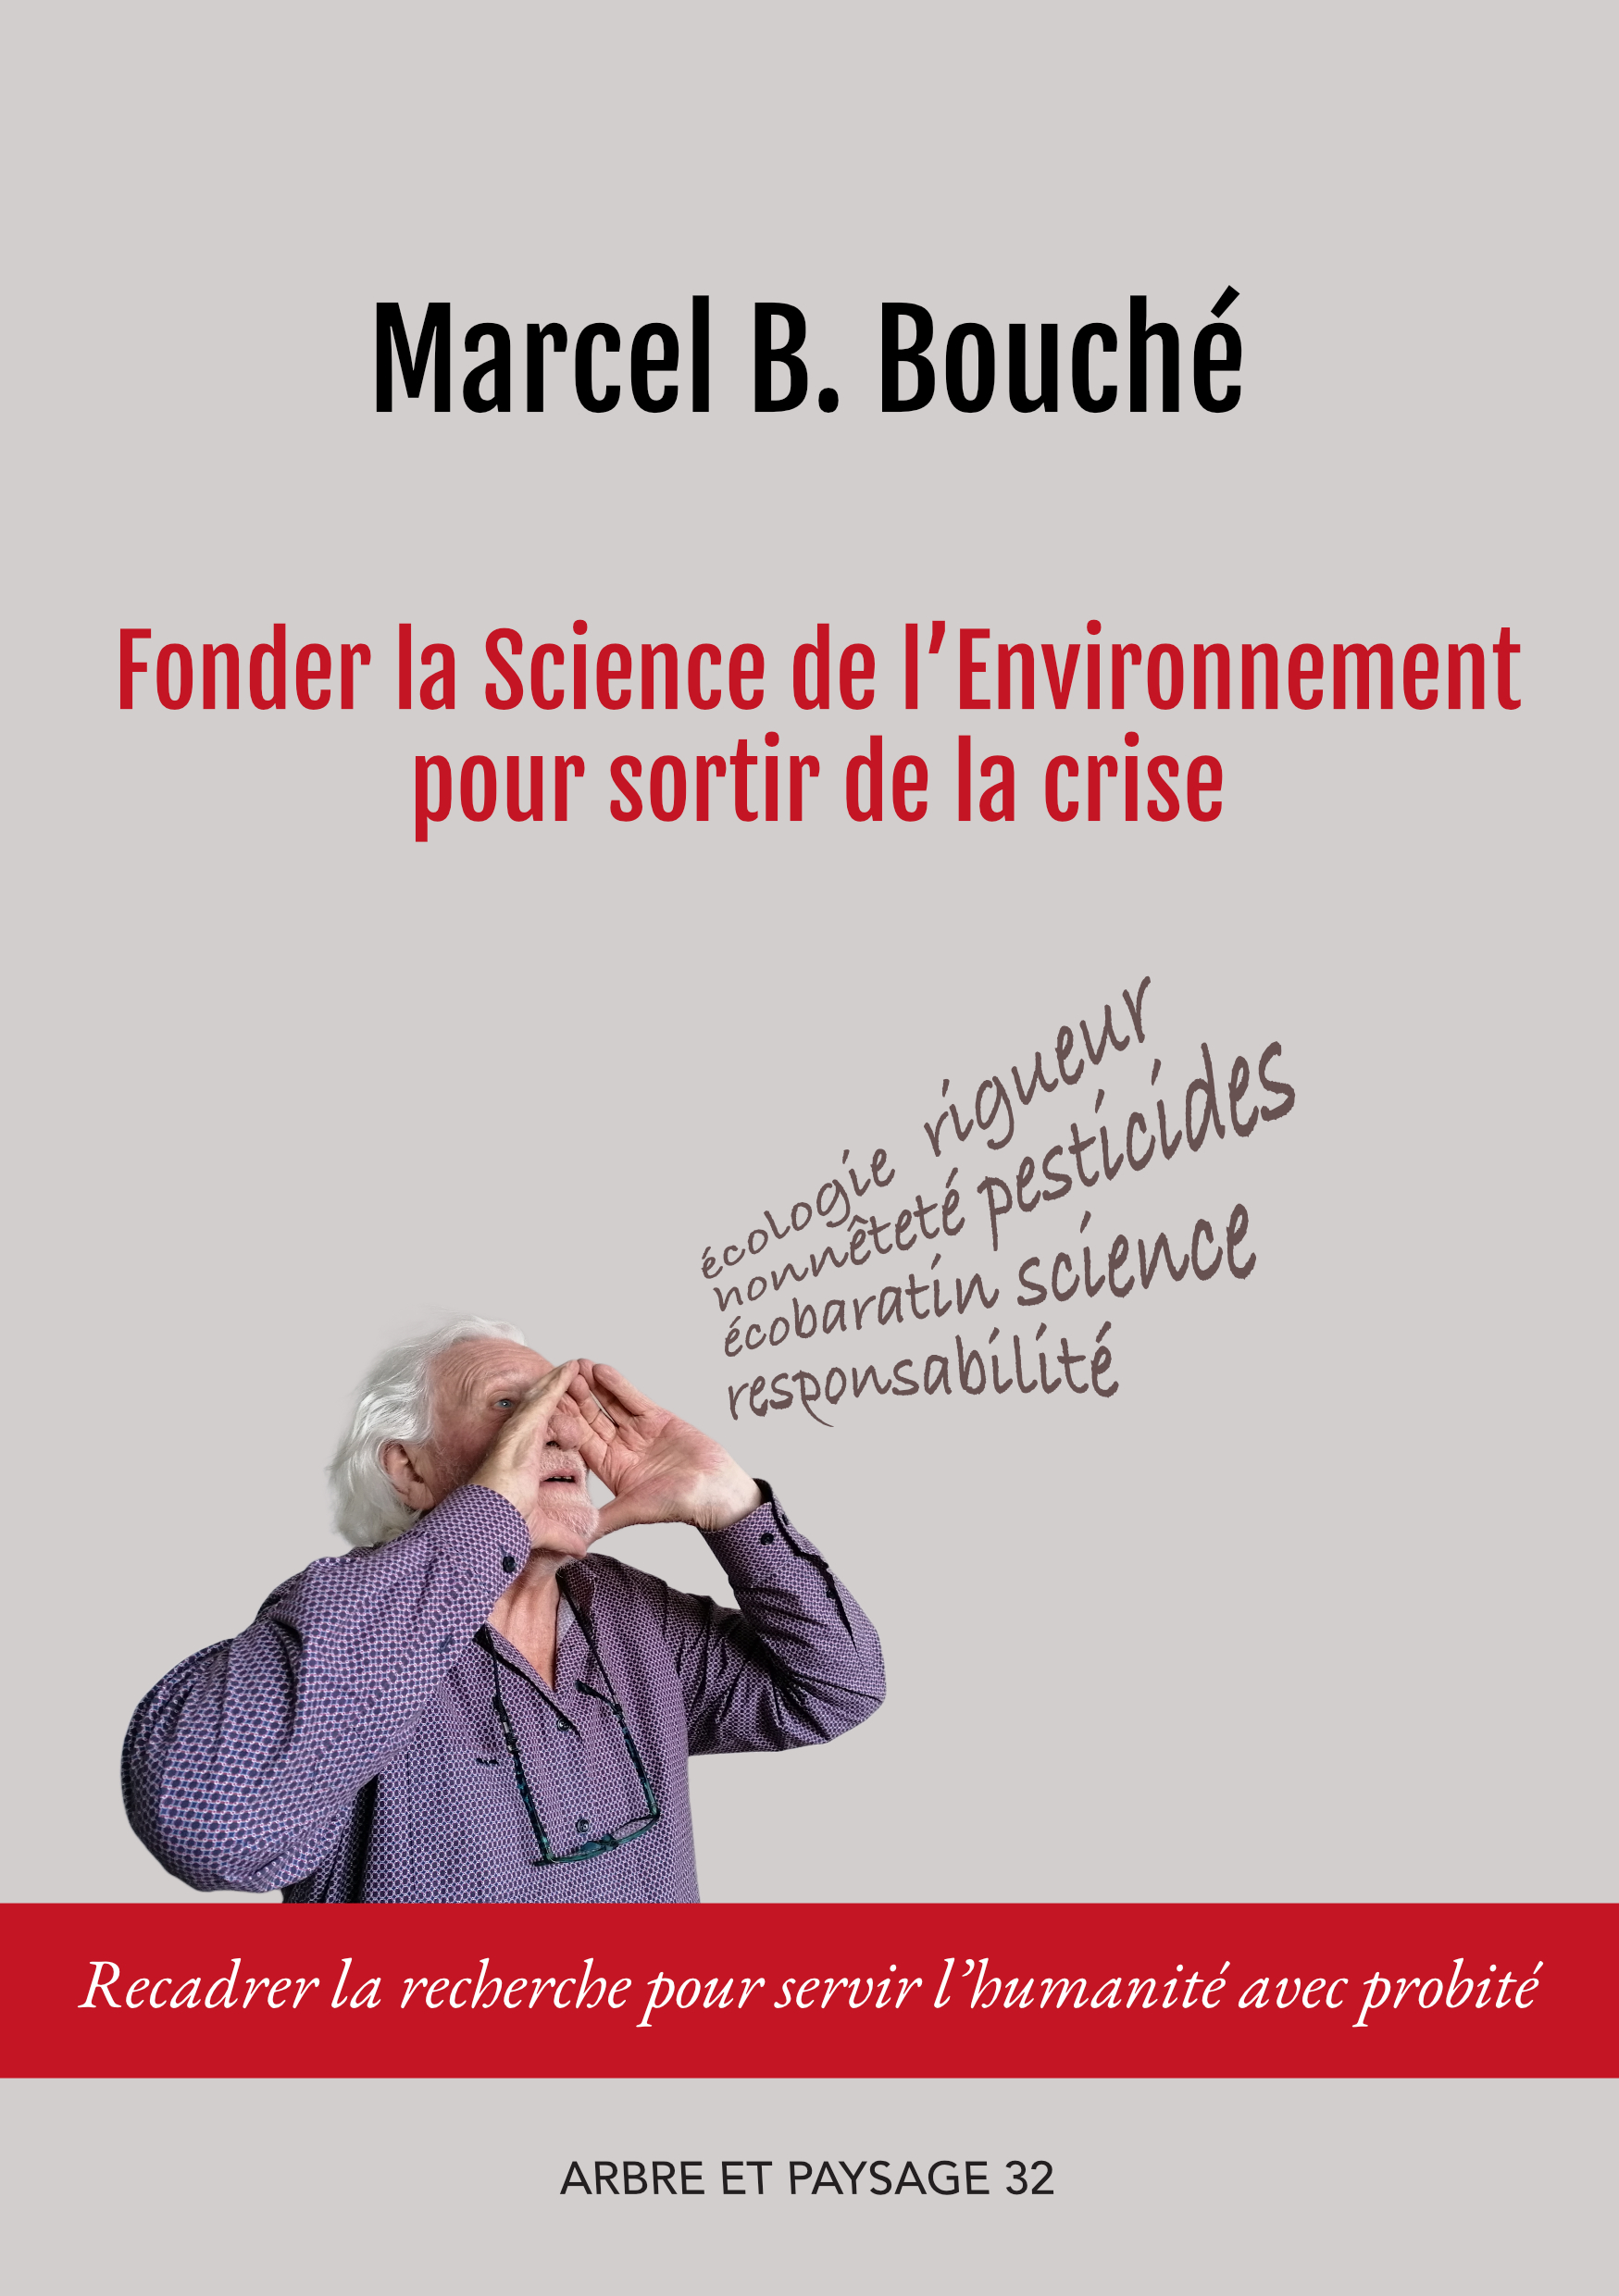 Marcel Bouché